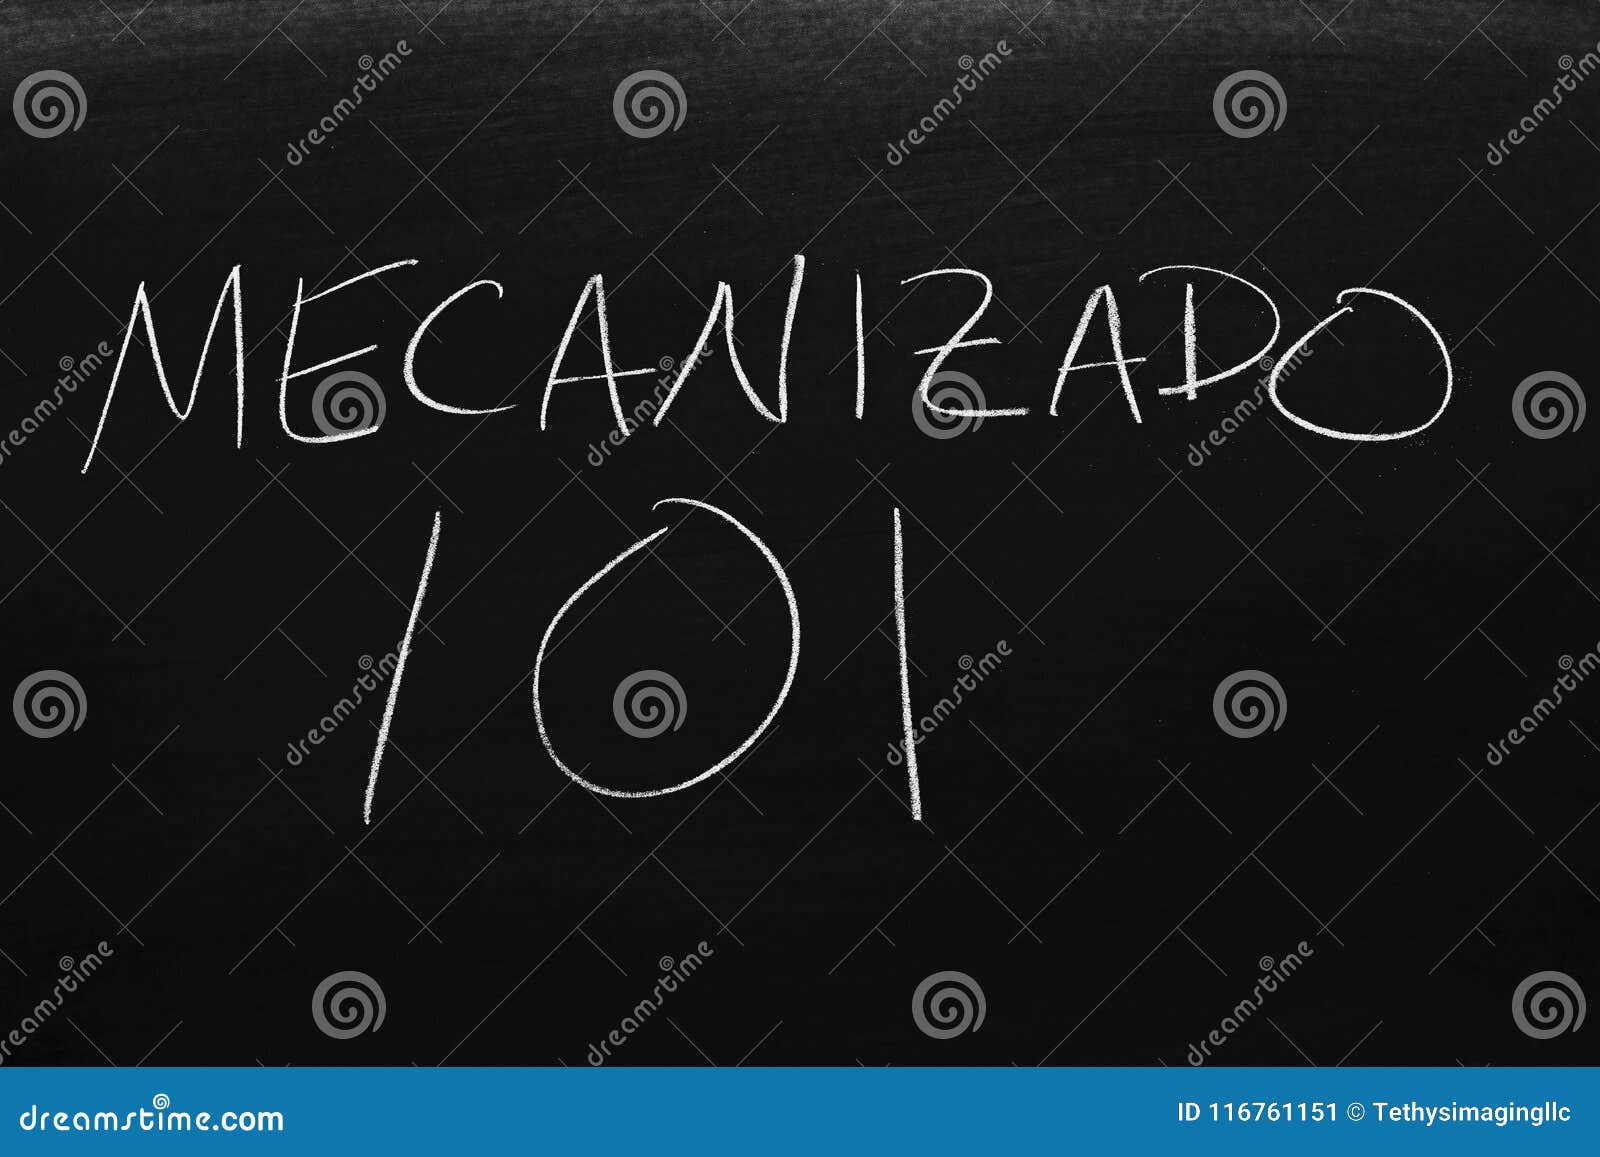 mecanizado 101 on a blackboard. translation: machining 101